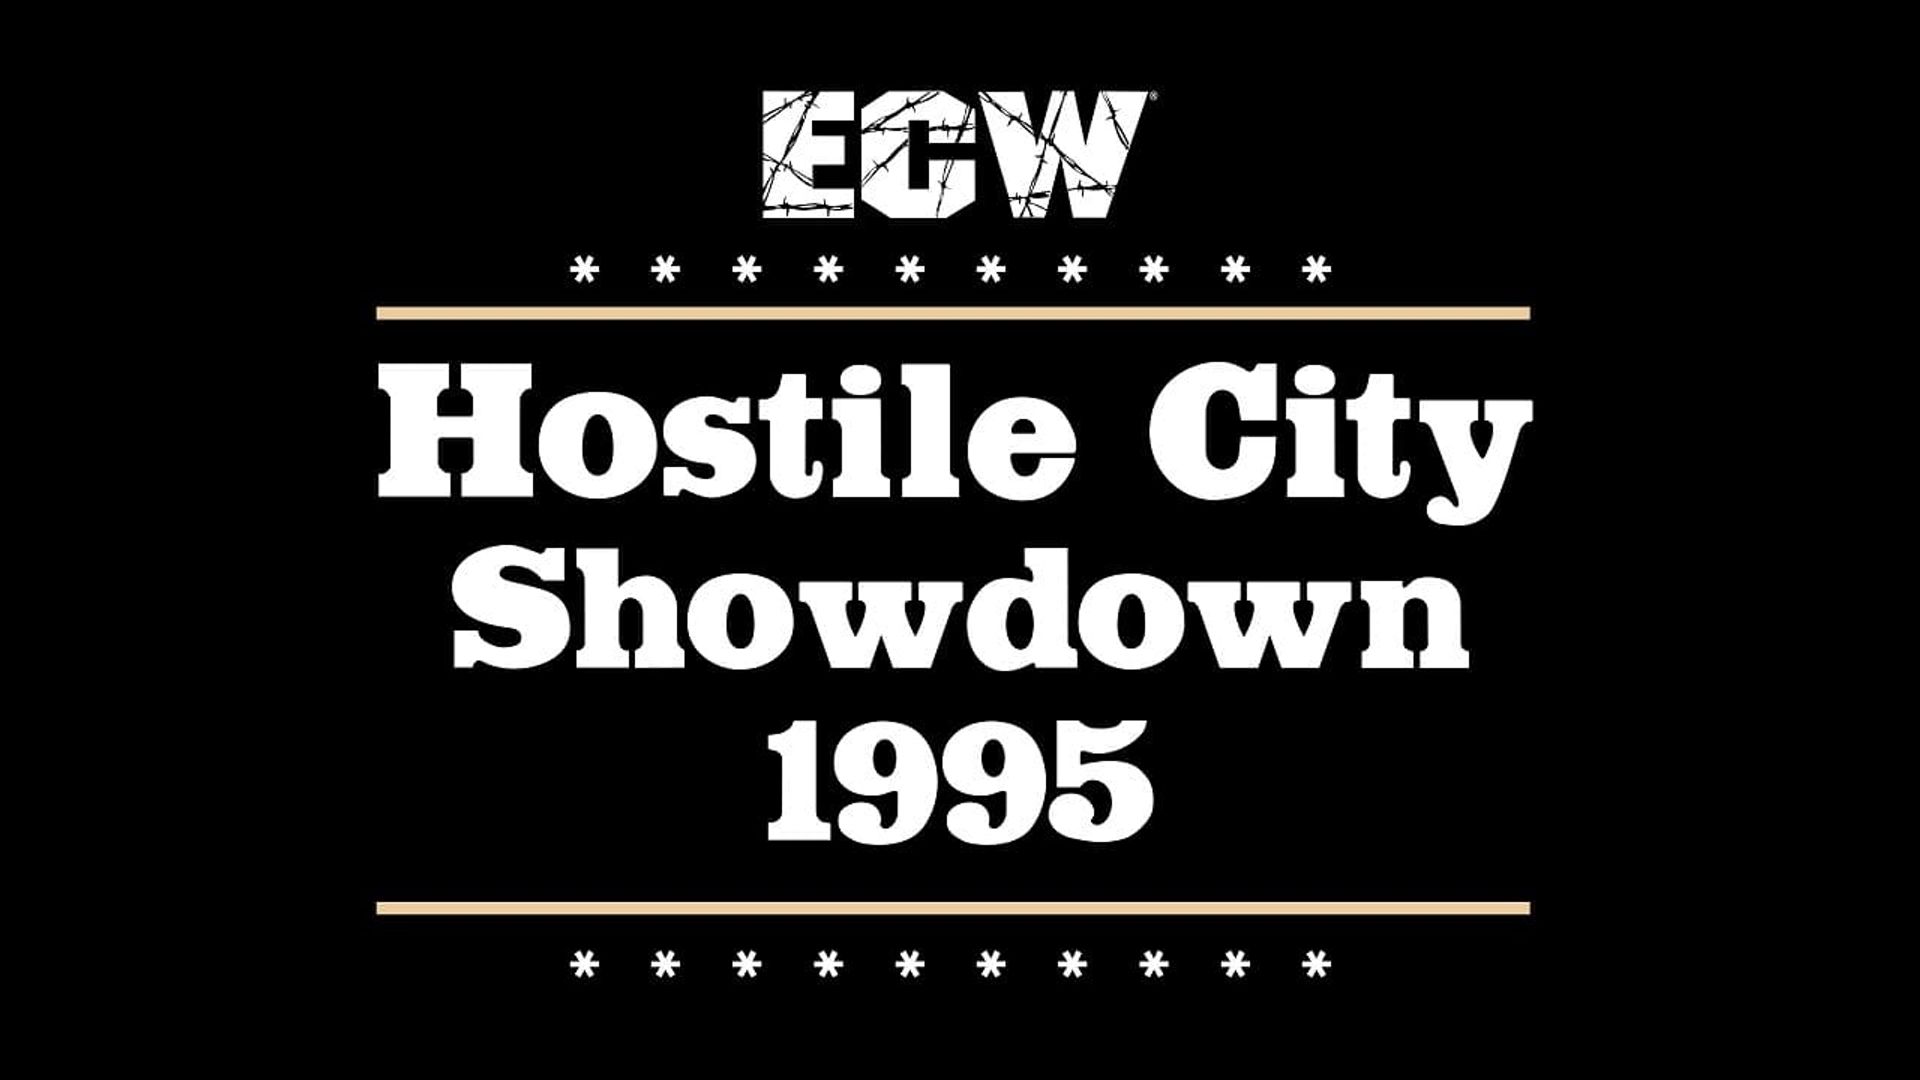 ECW Hostile City Showdown 1995 background